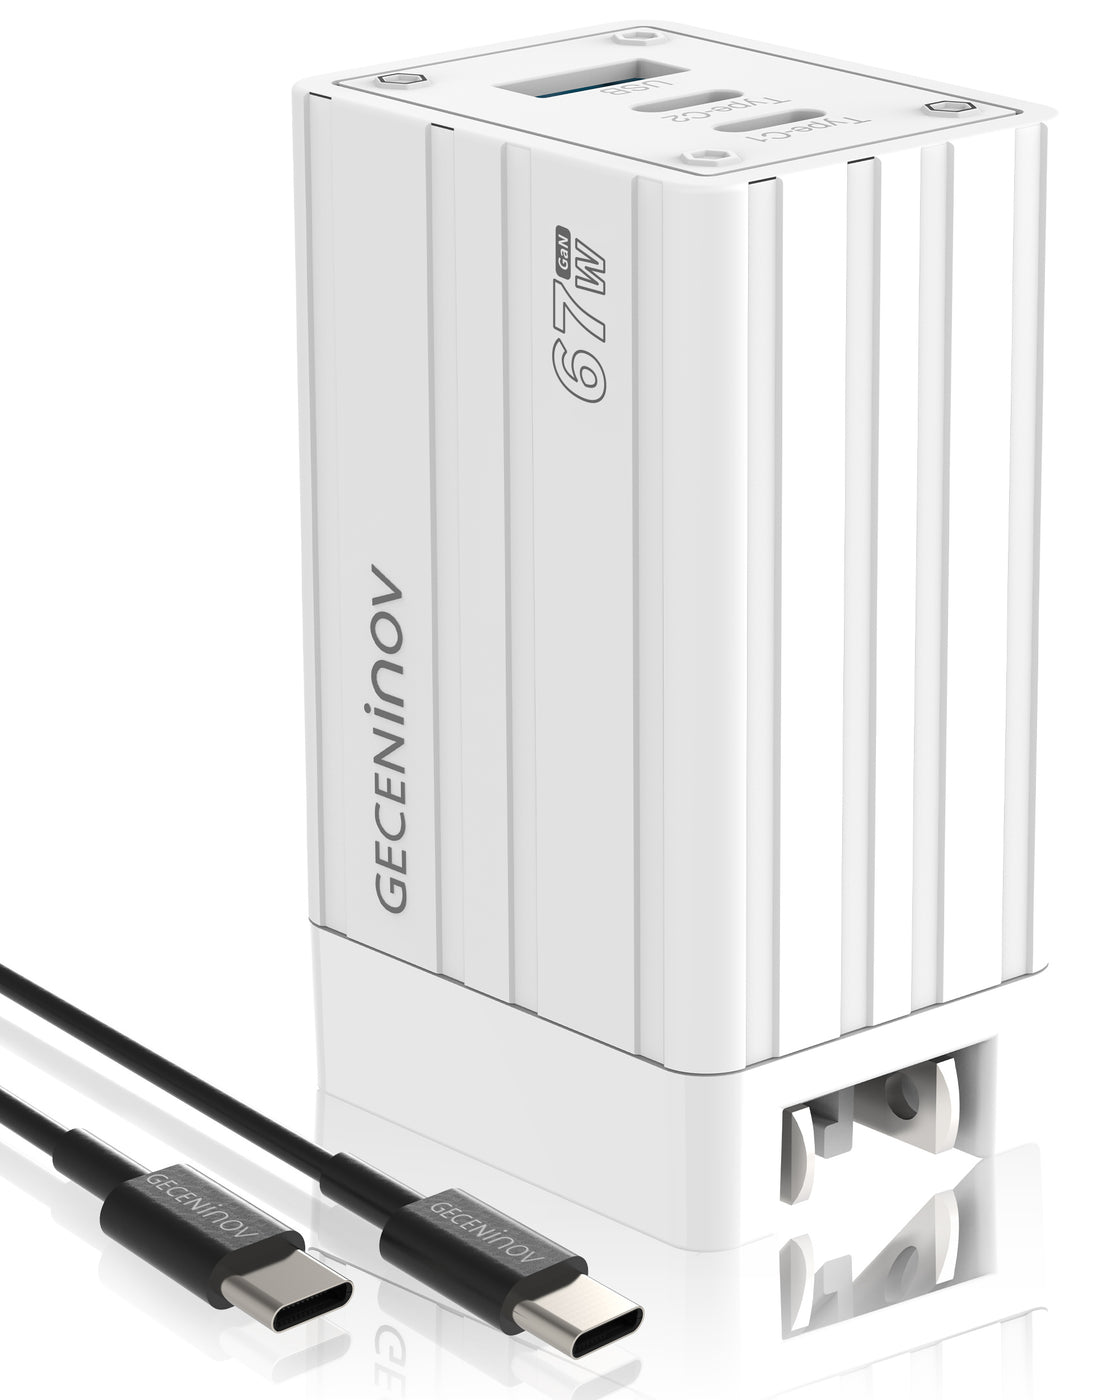 GECENinov 67w USB C GaN Fast Charger-3 Ports Charger